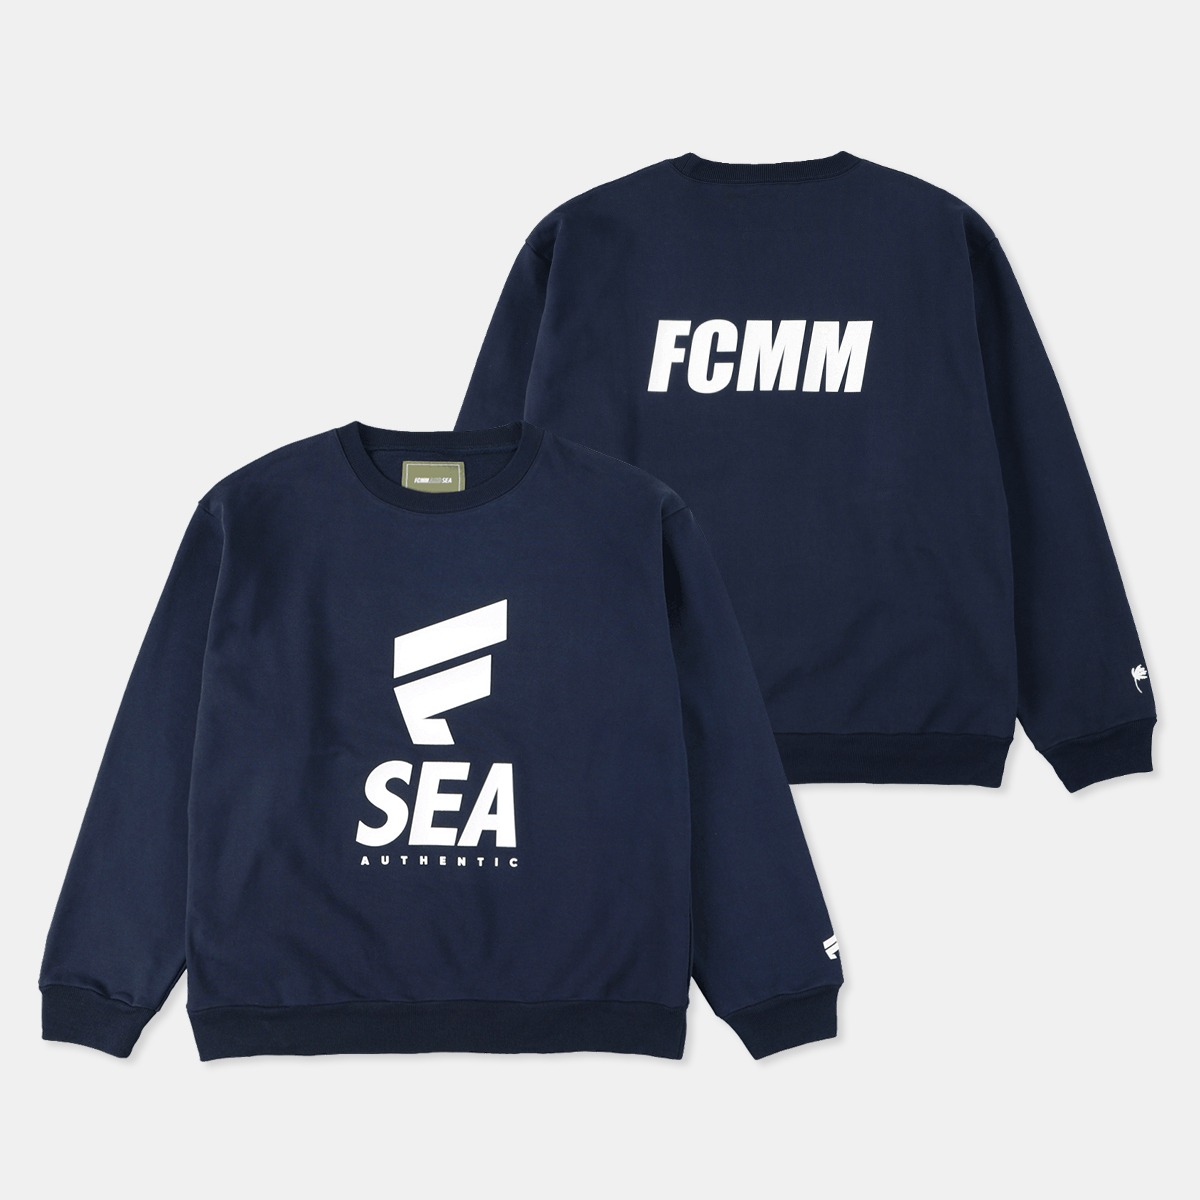 FCMM x WIND AND SEA Sweat shrit - NAVY